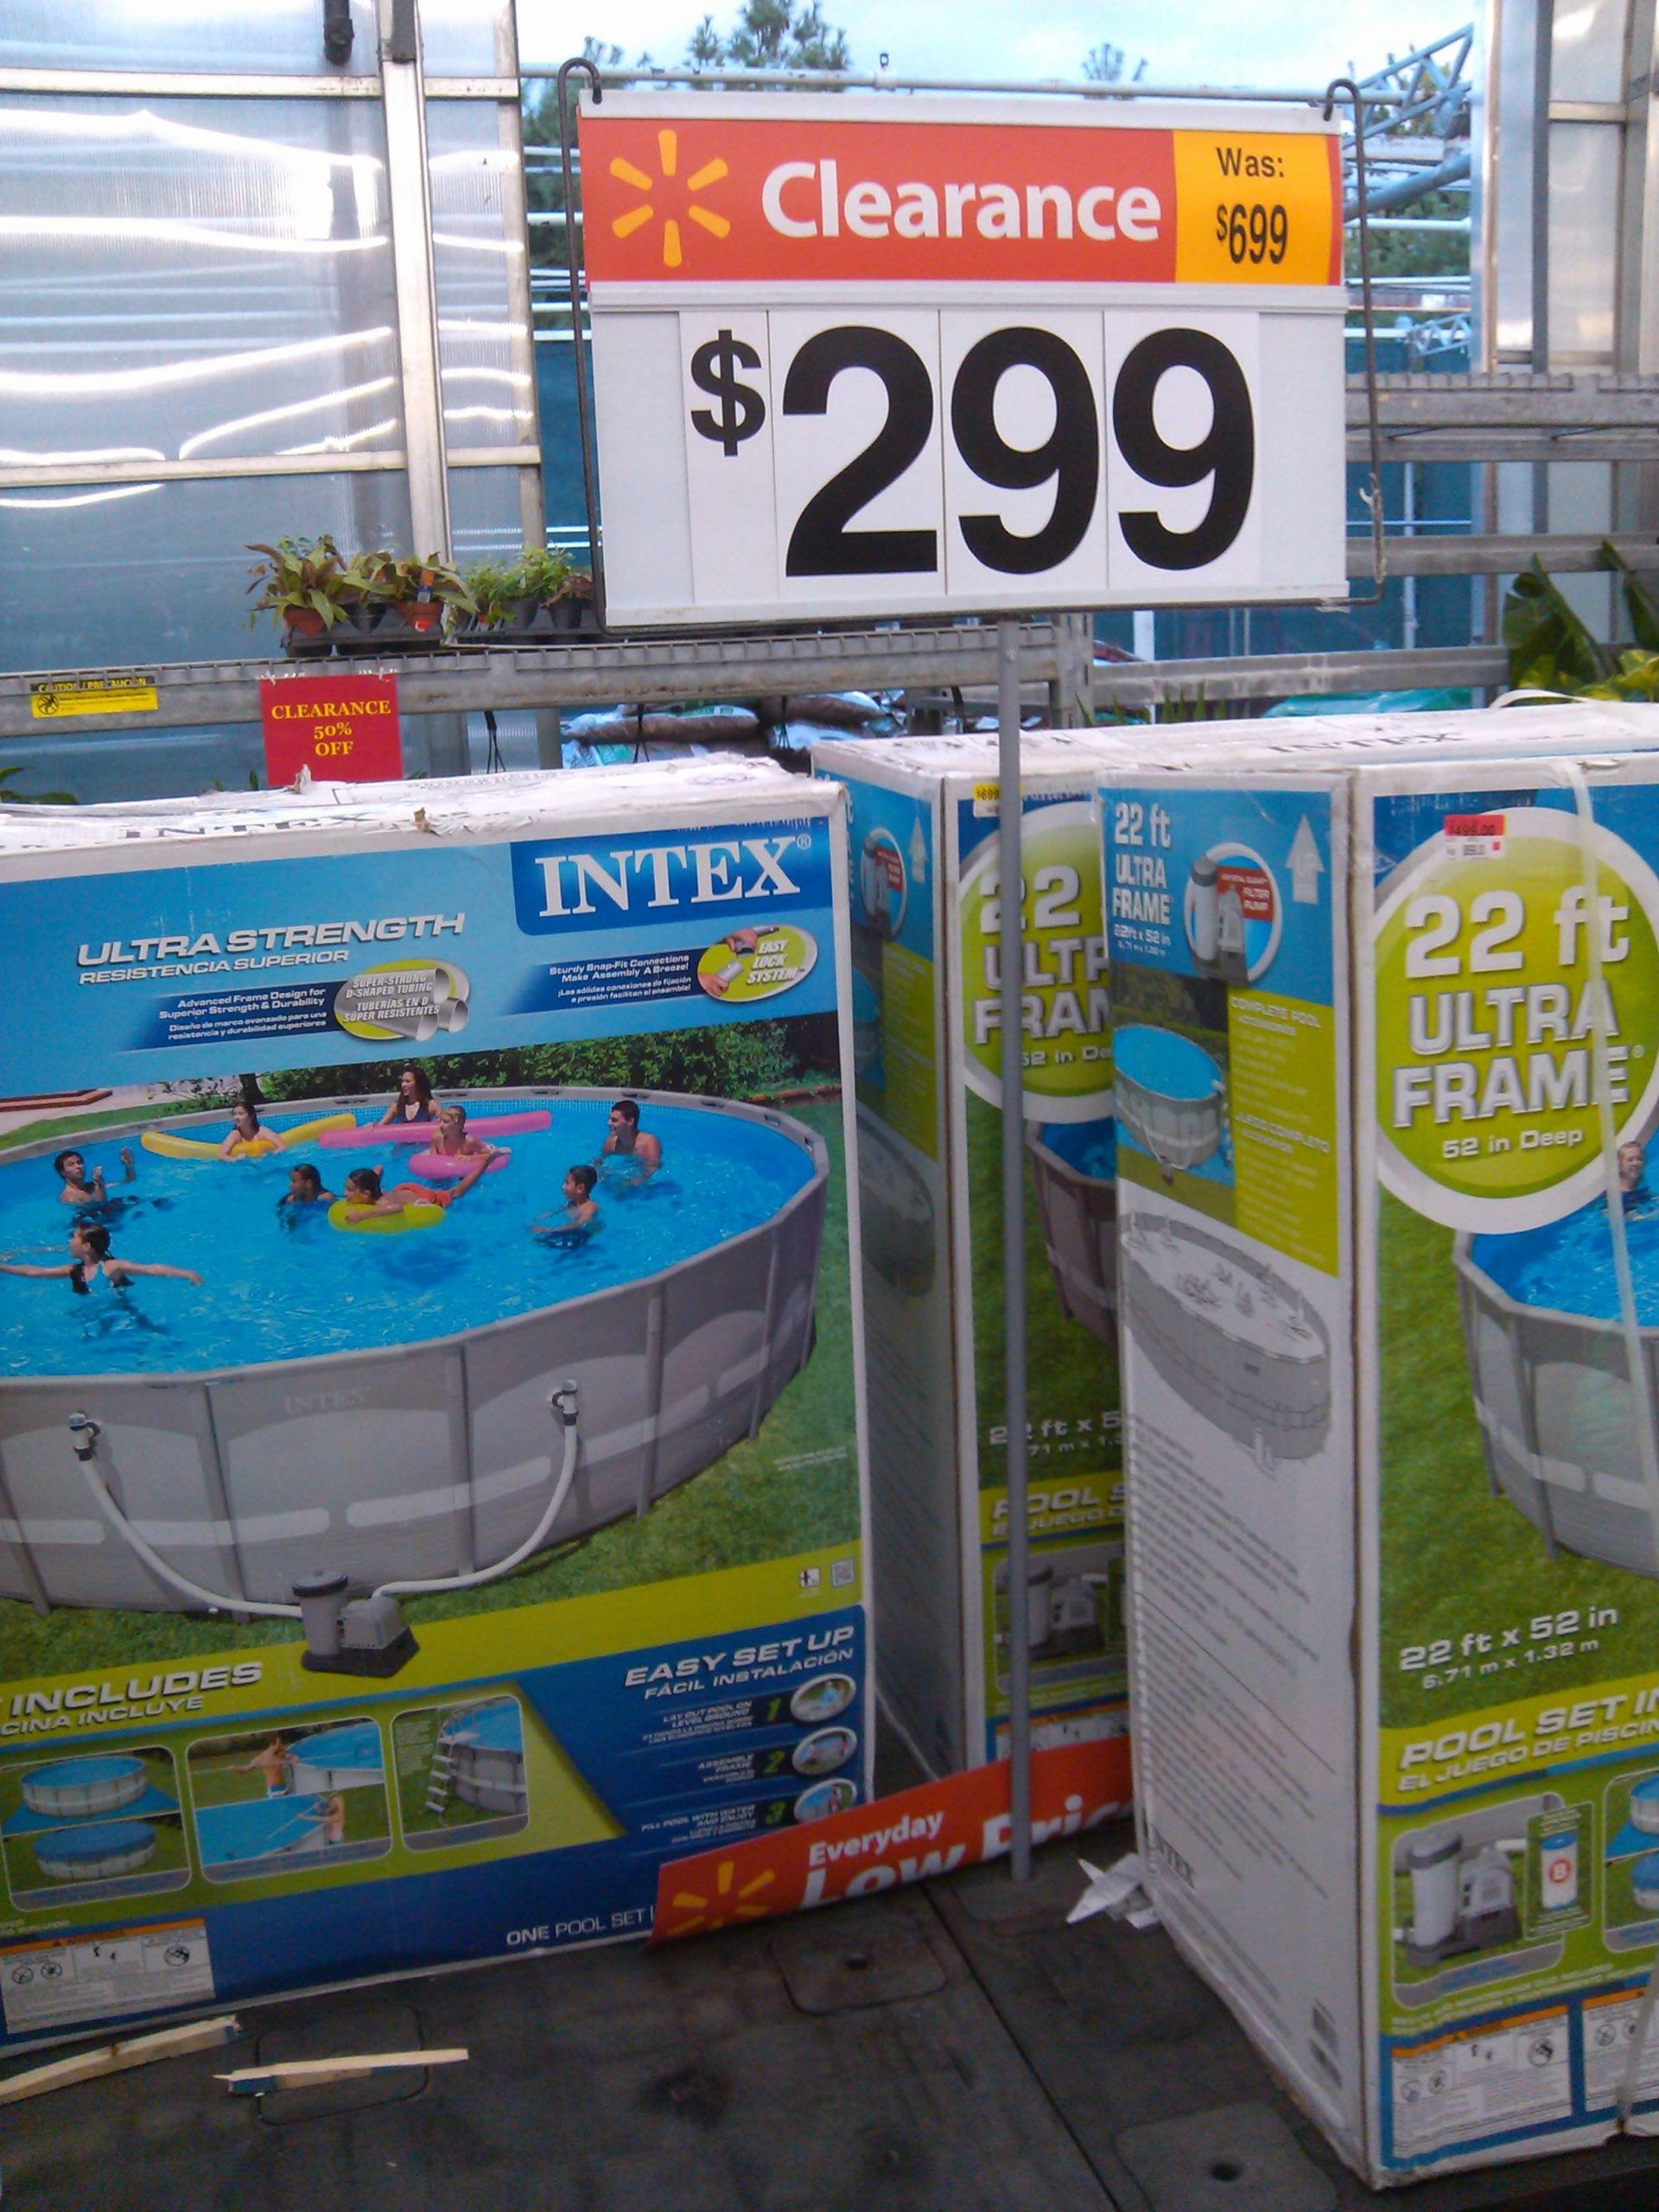 Walmart Above Ground Swimming Pool
 ground swimming pool prices at Walmart slashed in